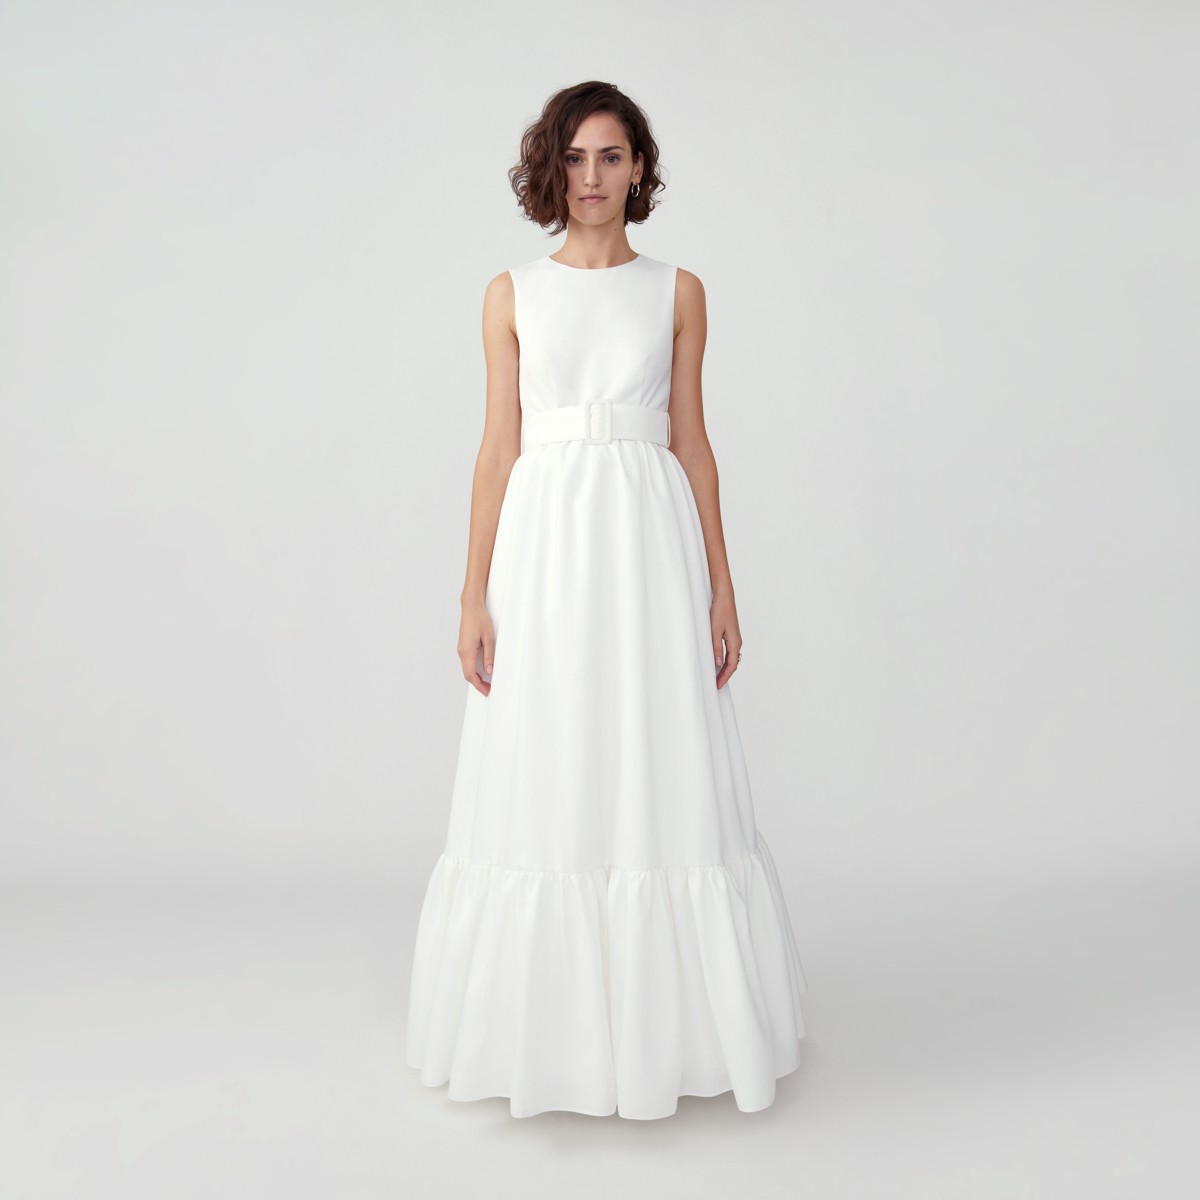 brunette woman wearing a sleeveless belted white wedding dress